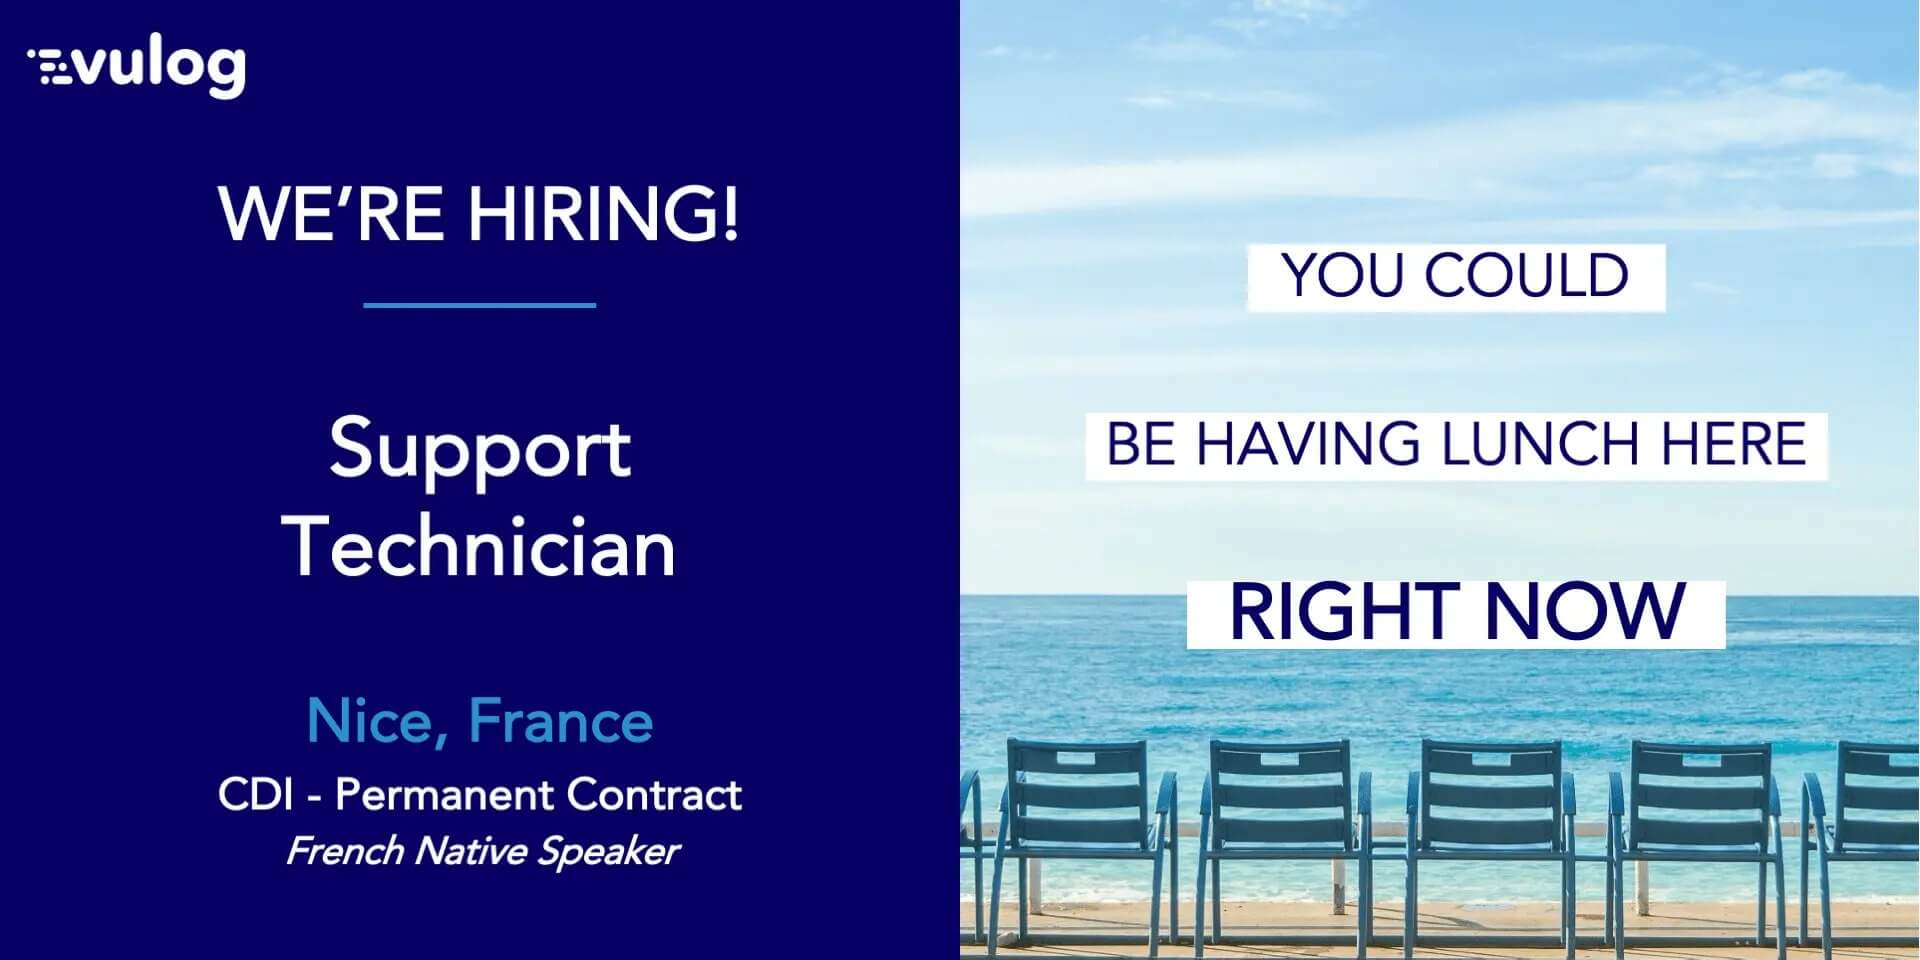 Vulog hiring Support Technician in Nice